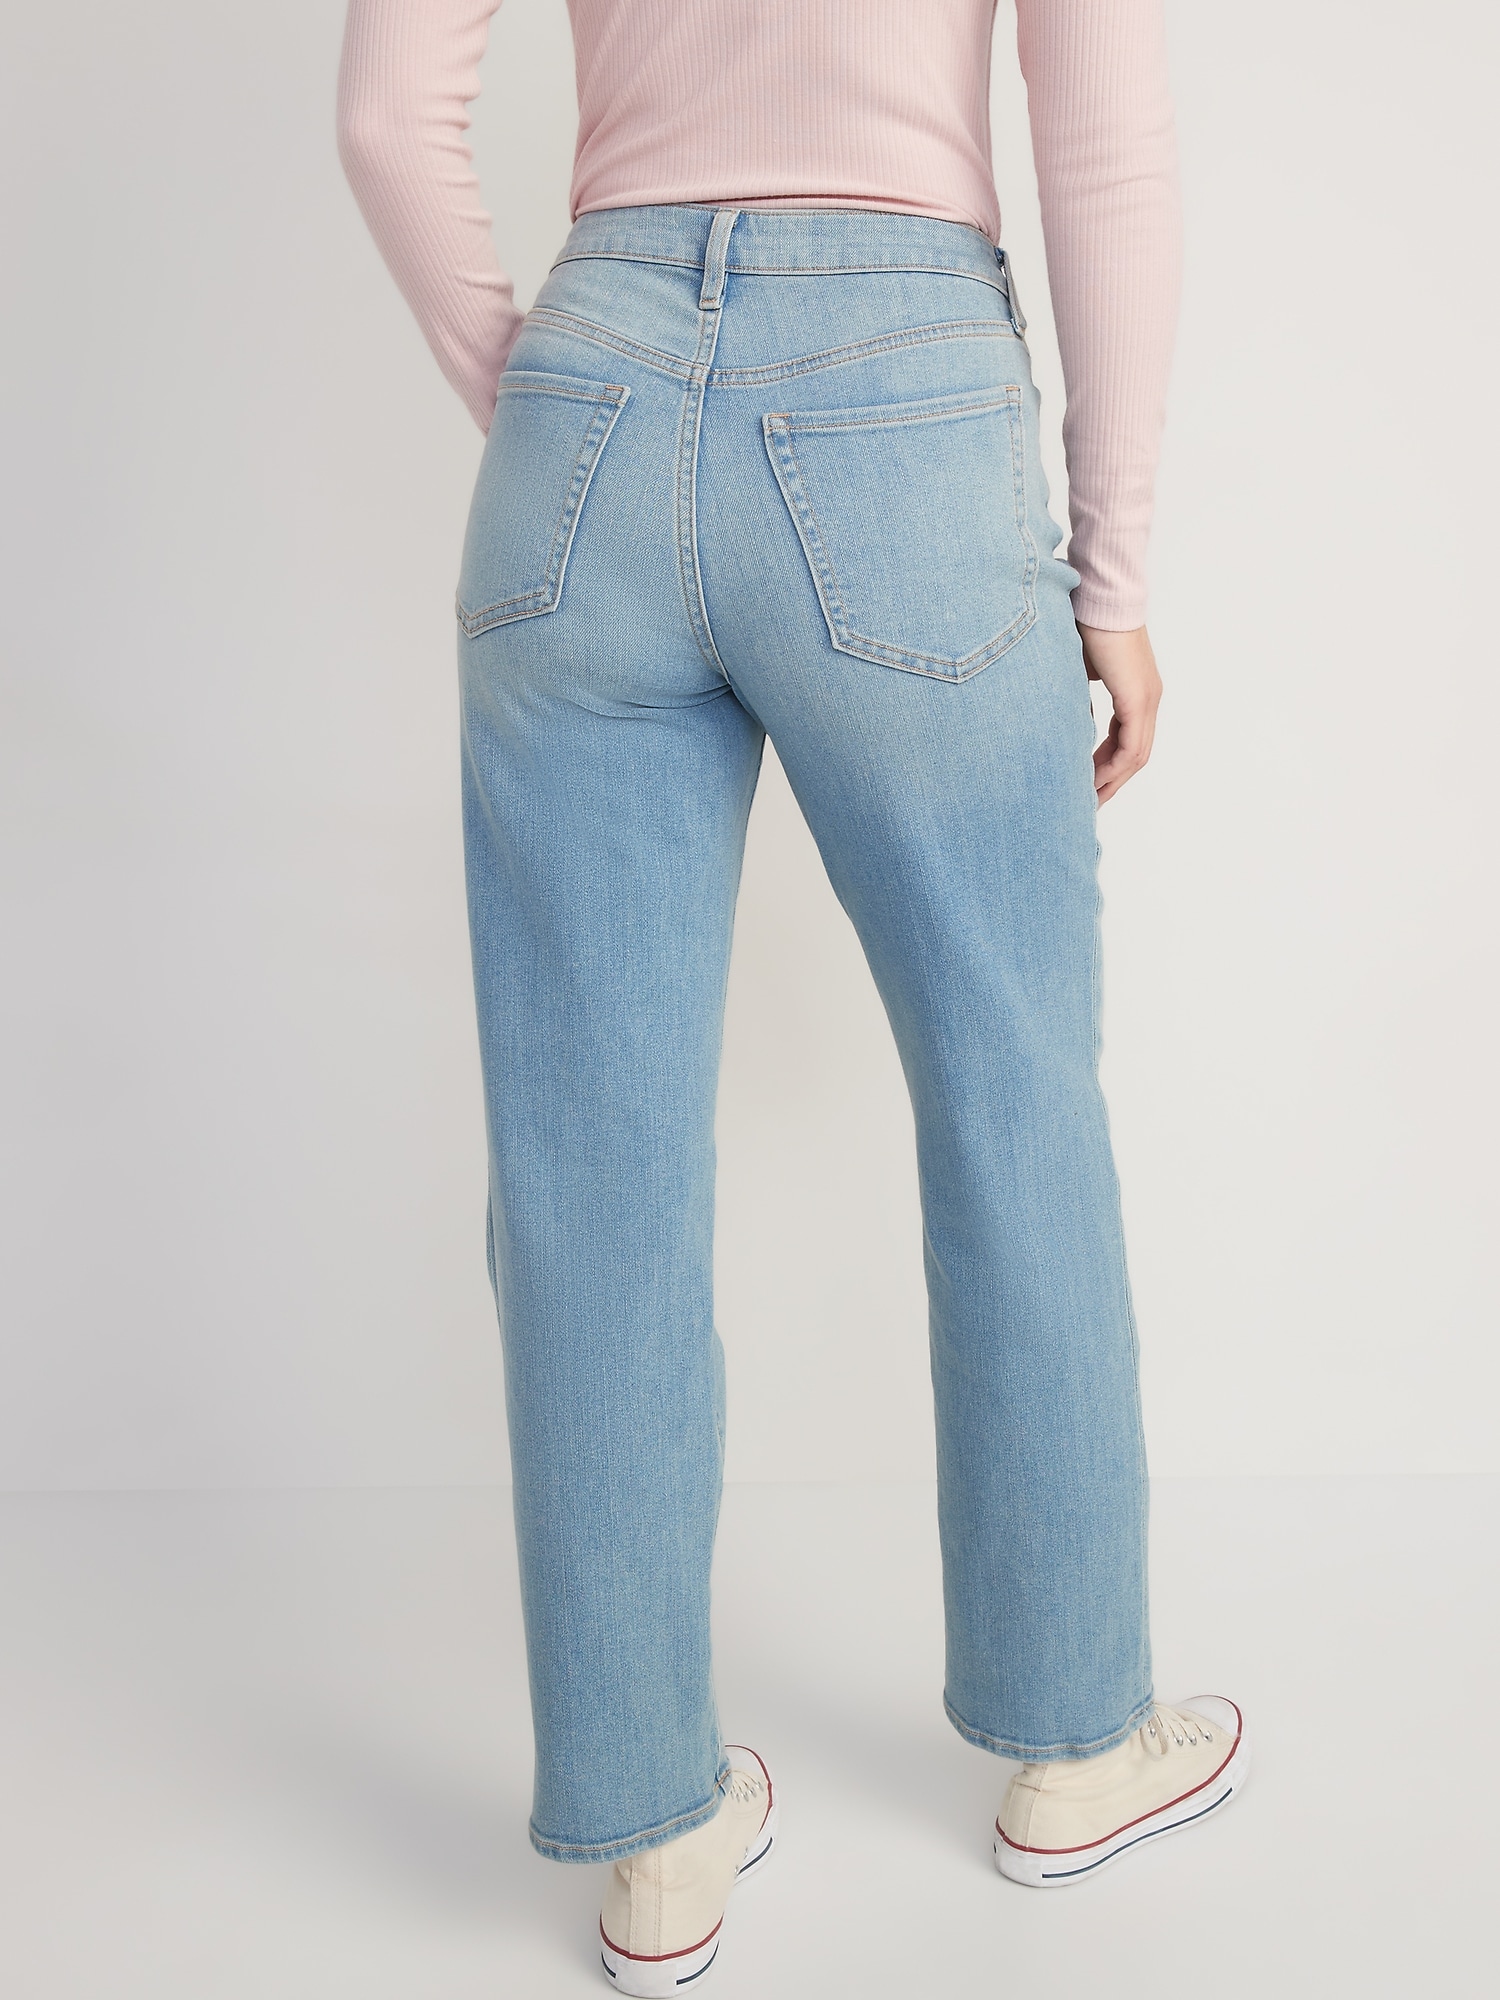 Old Navy Women's High-Waisted OG Loose Jeans - Blue - Size 10